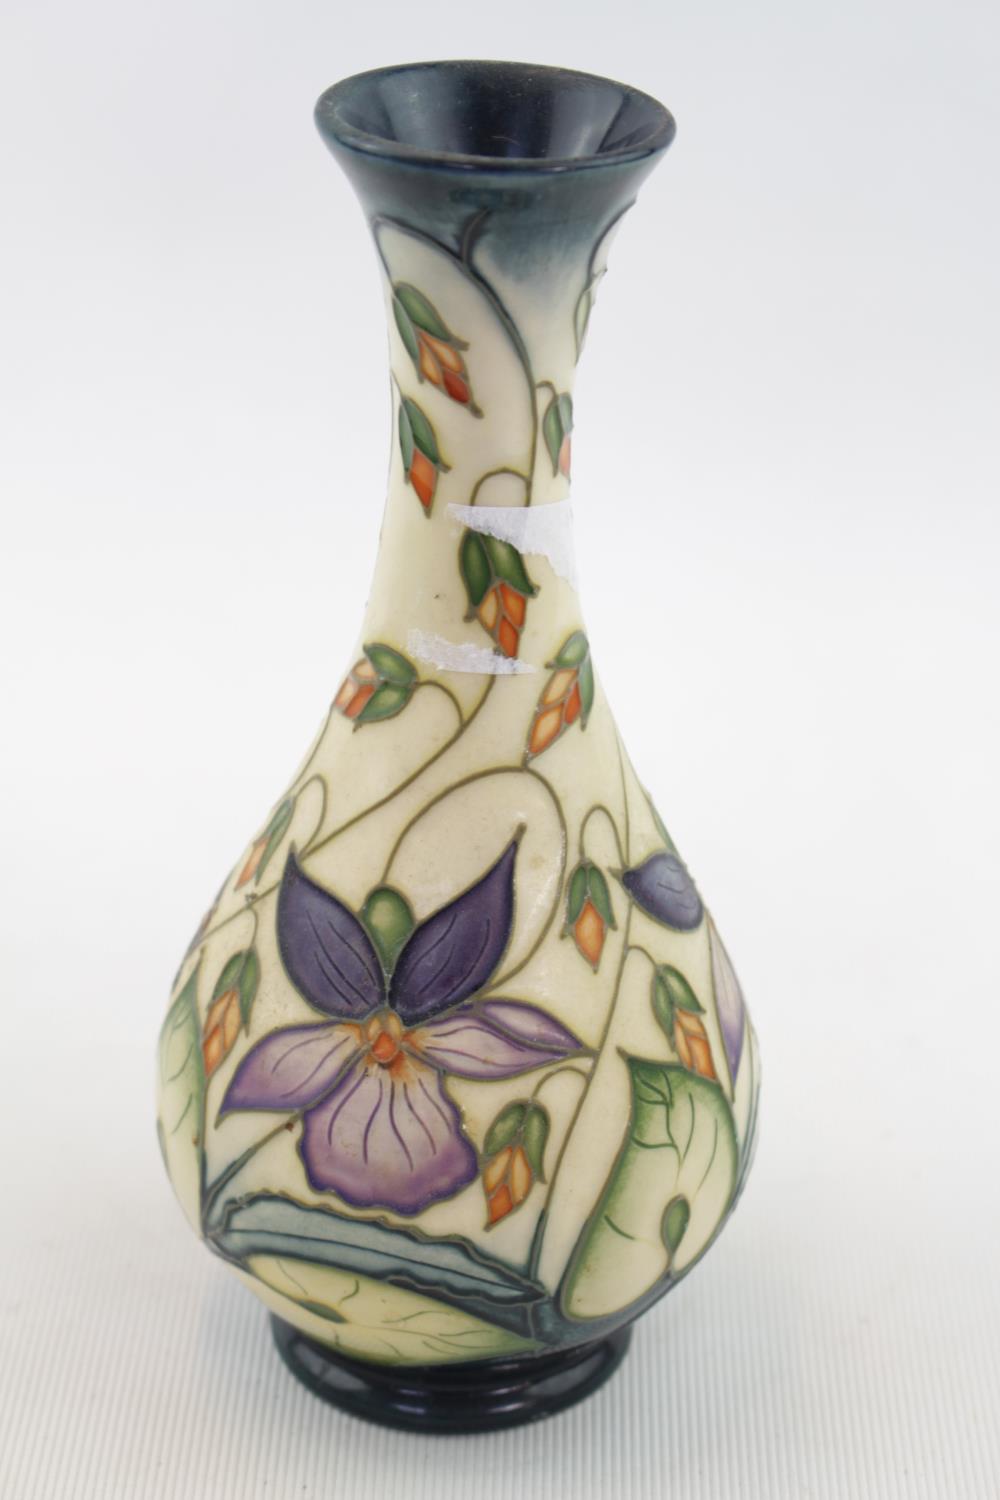 Moorcroft Posy Vase in Sweet Thief pattern by Rachel Bishop dated 2001 16cm in Height